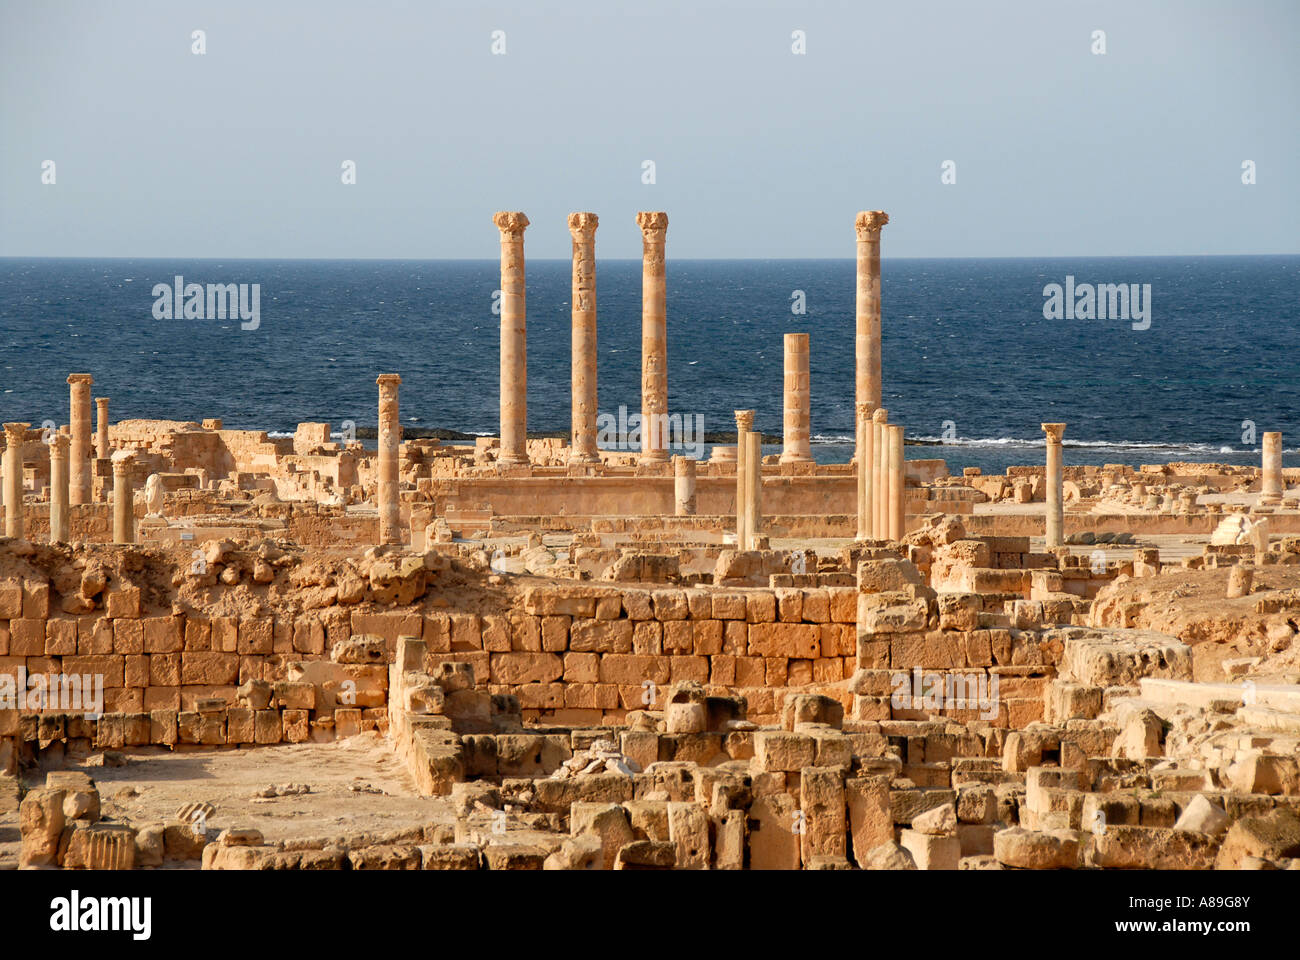 View over excavation site walls and pillars at the sea Sabratha Libya Stock Photo